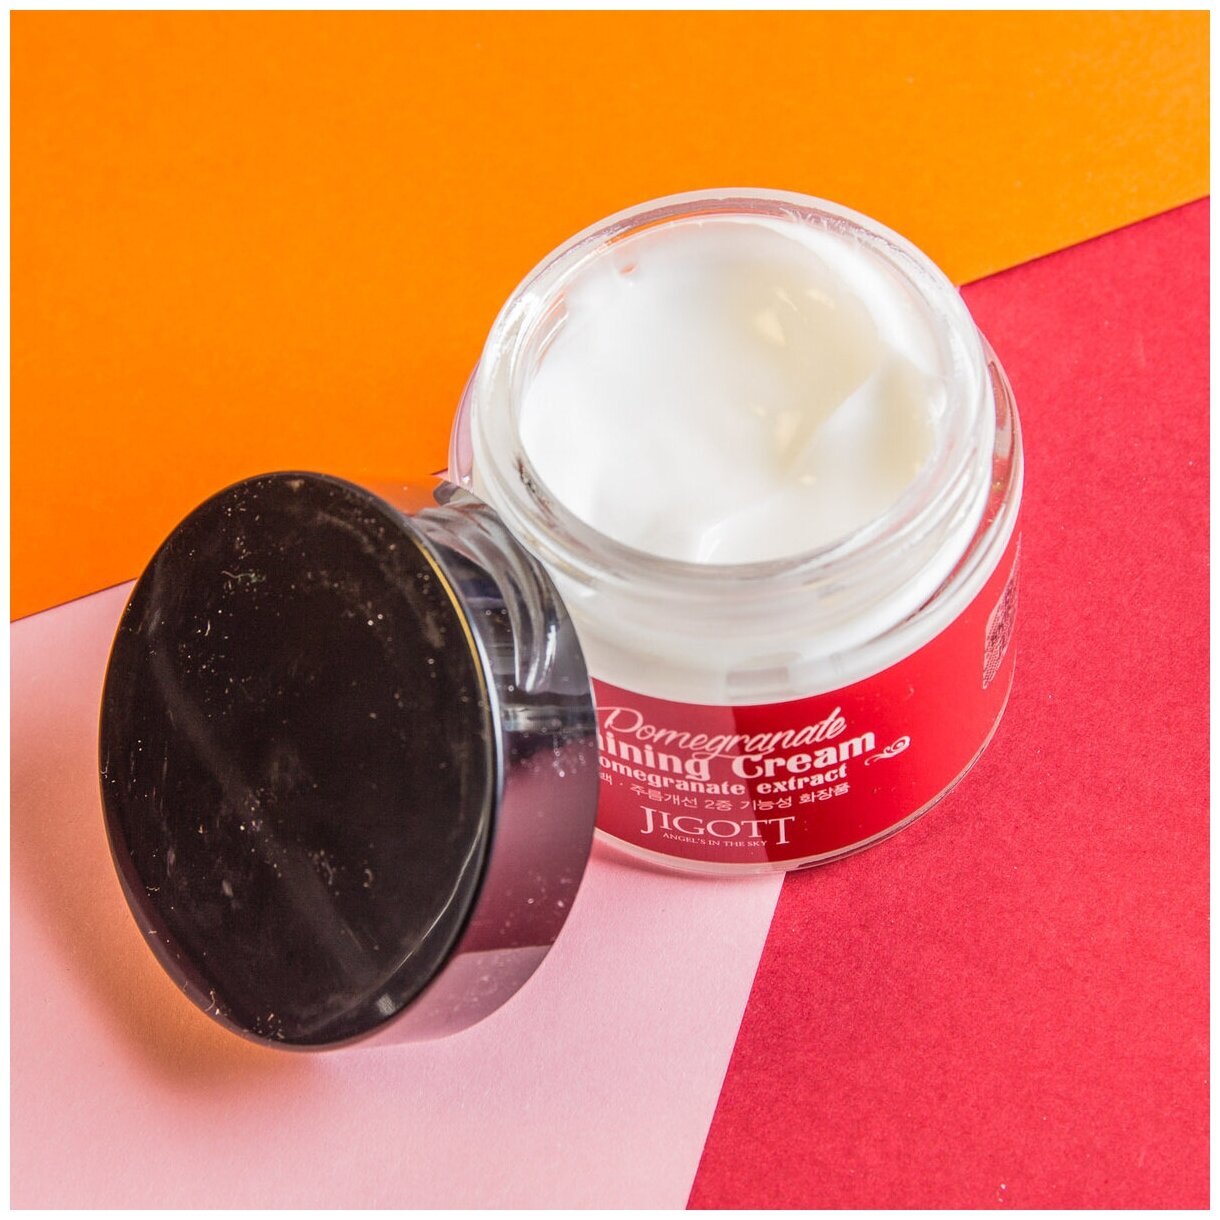 JIGOTT Крем с экстрактом граната для яркости кожи Pomegranate Shining Cream, 70 мл - фотография № 14